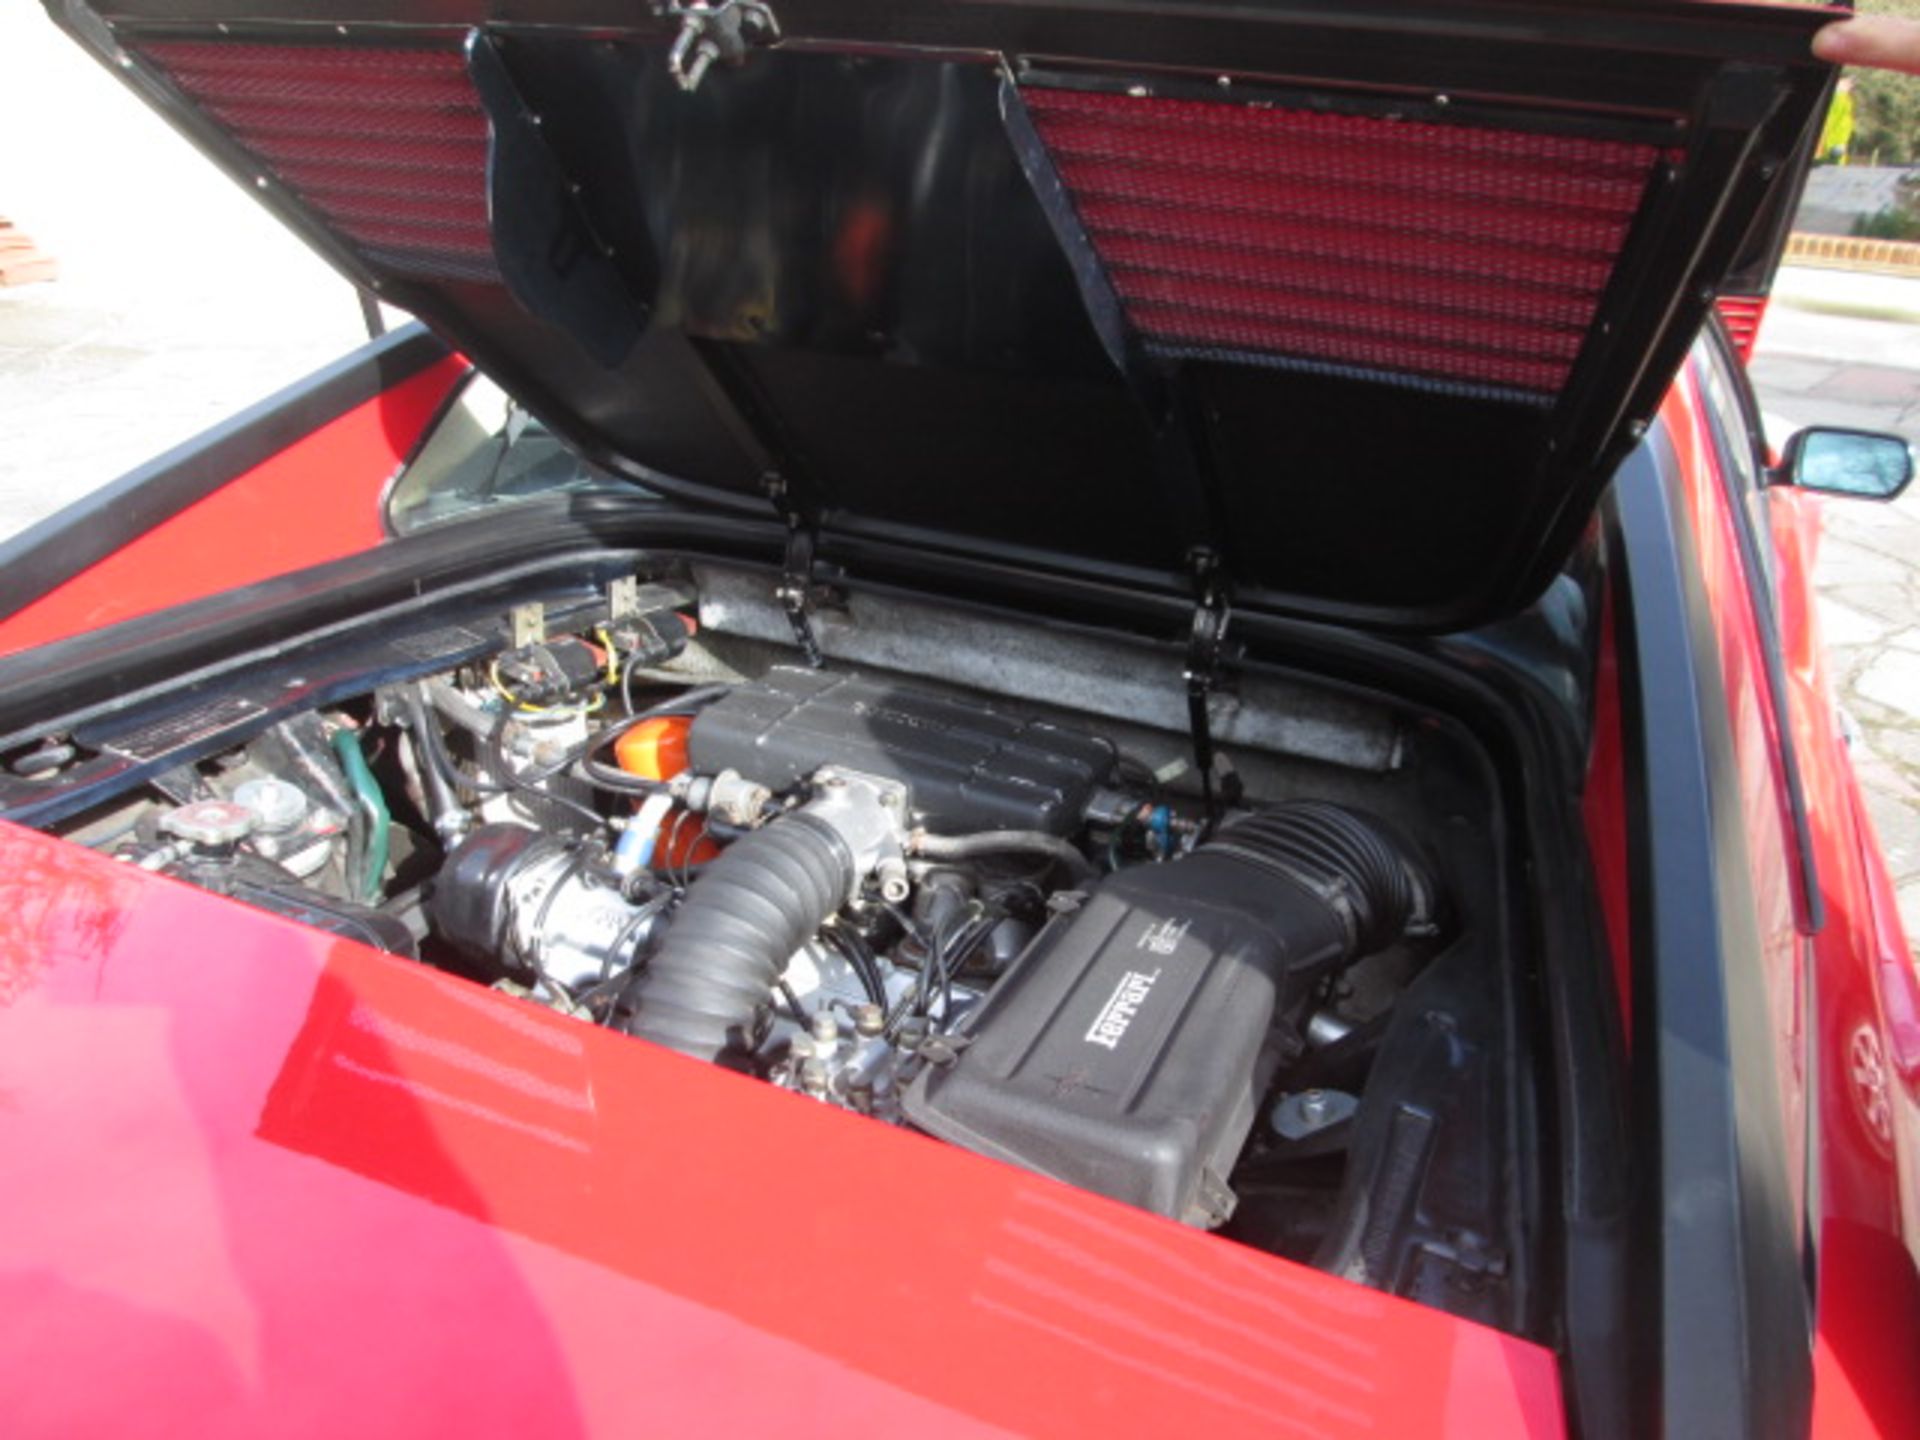 Ferrari Mondial 8 RHD 2926cc Coupe - Image 7 of 25